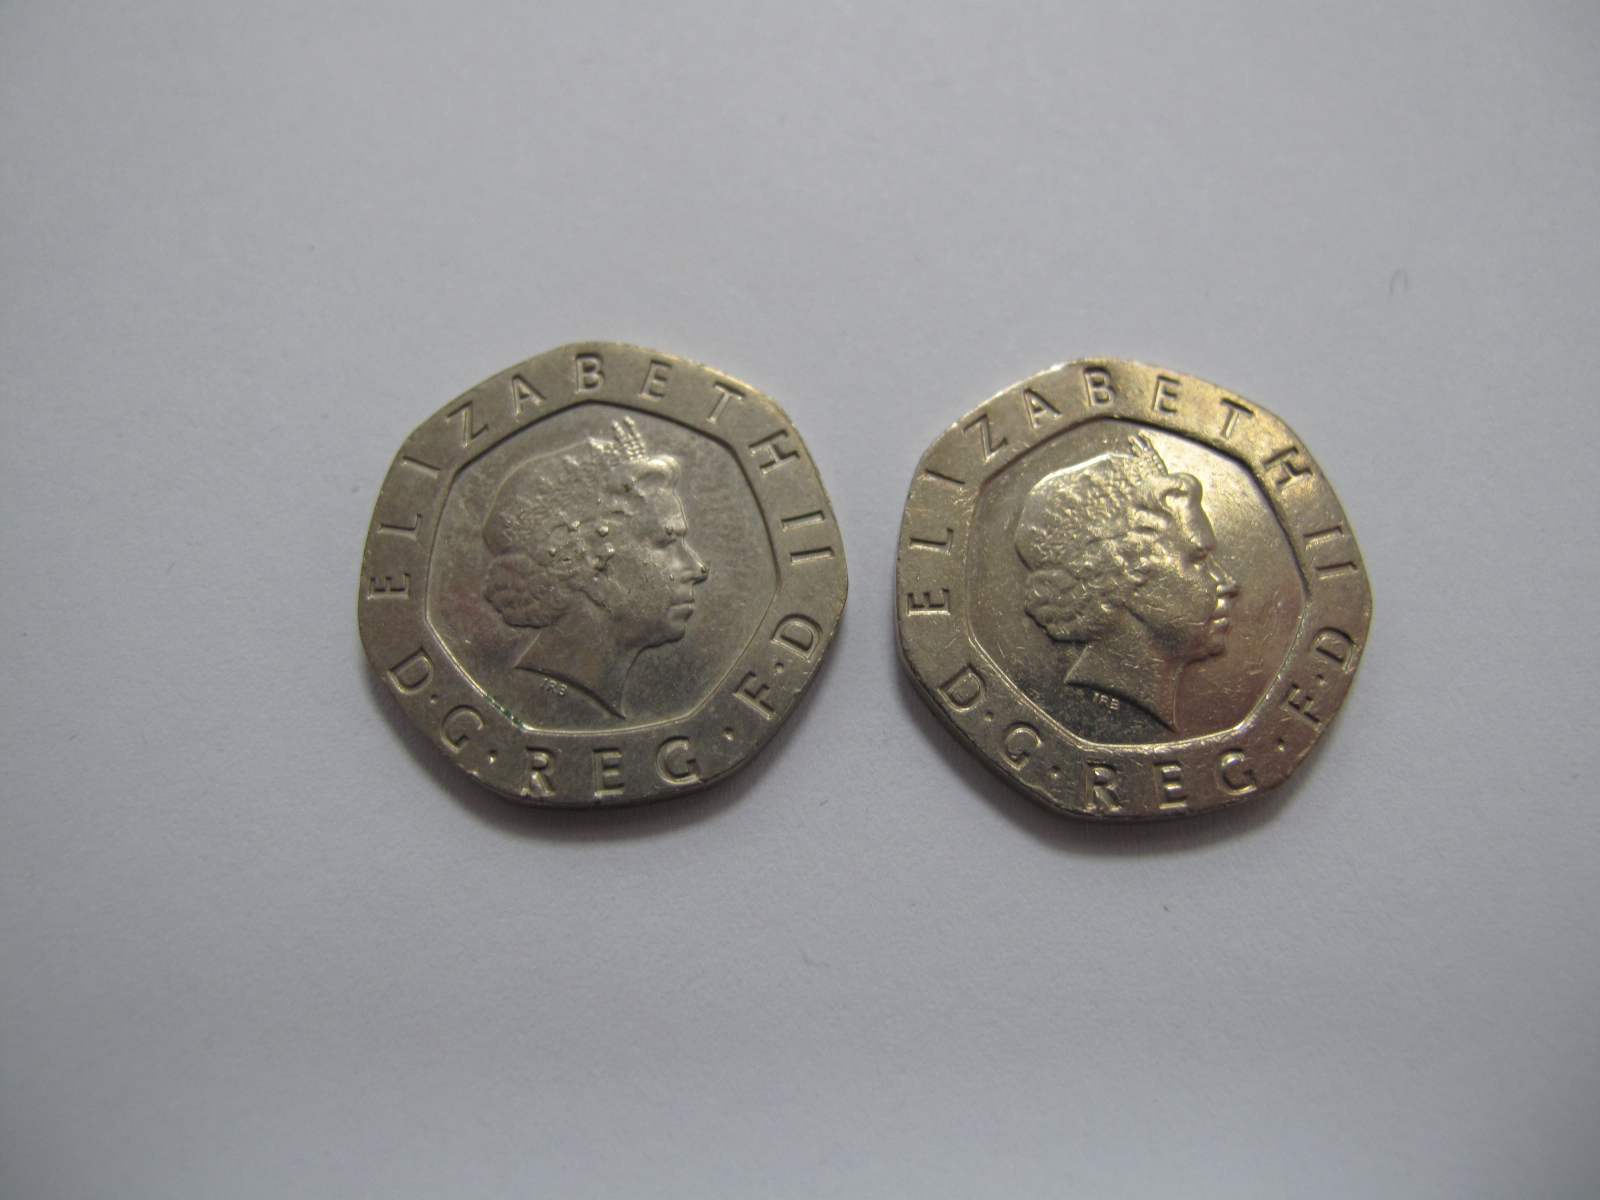 *WITHDRAWN* Two 'Undated' Twenty Pence Coins (Issued in 2008), Elizabeth II D.G. Reg FD.